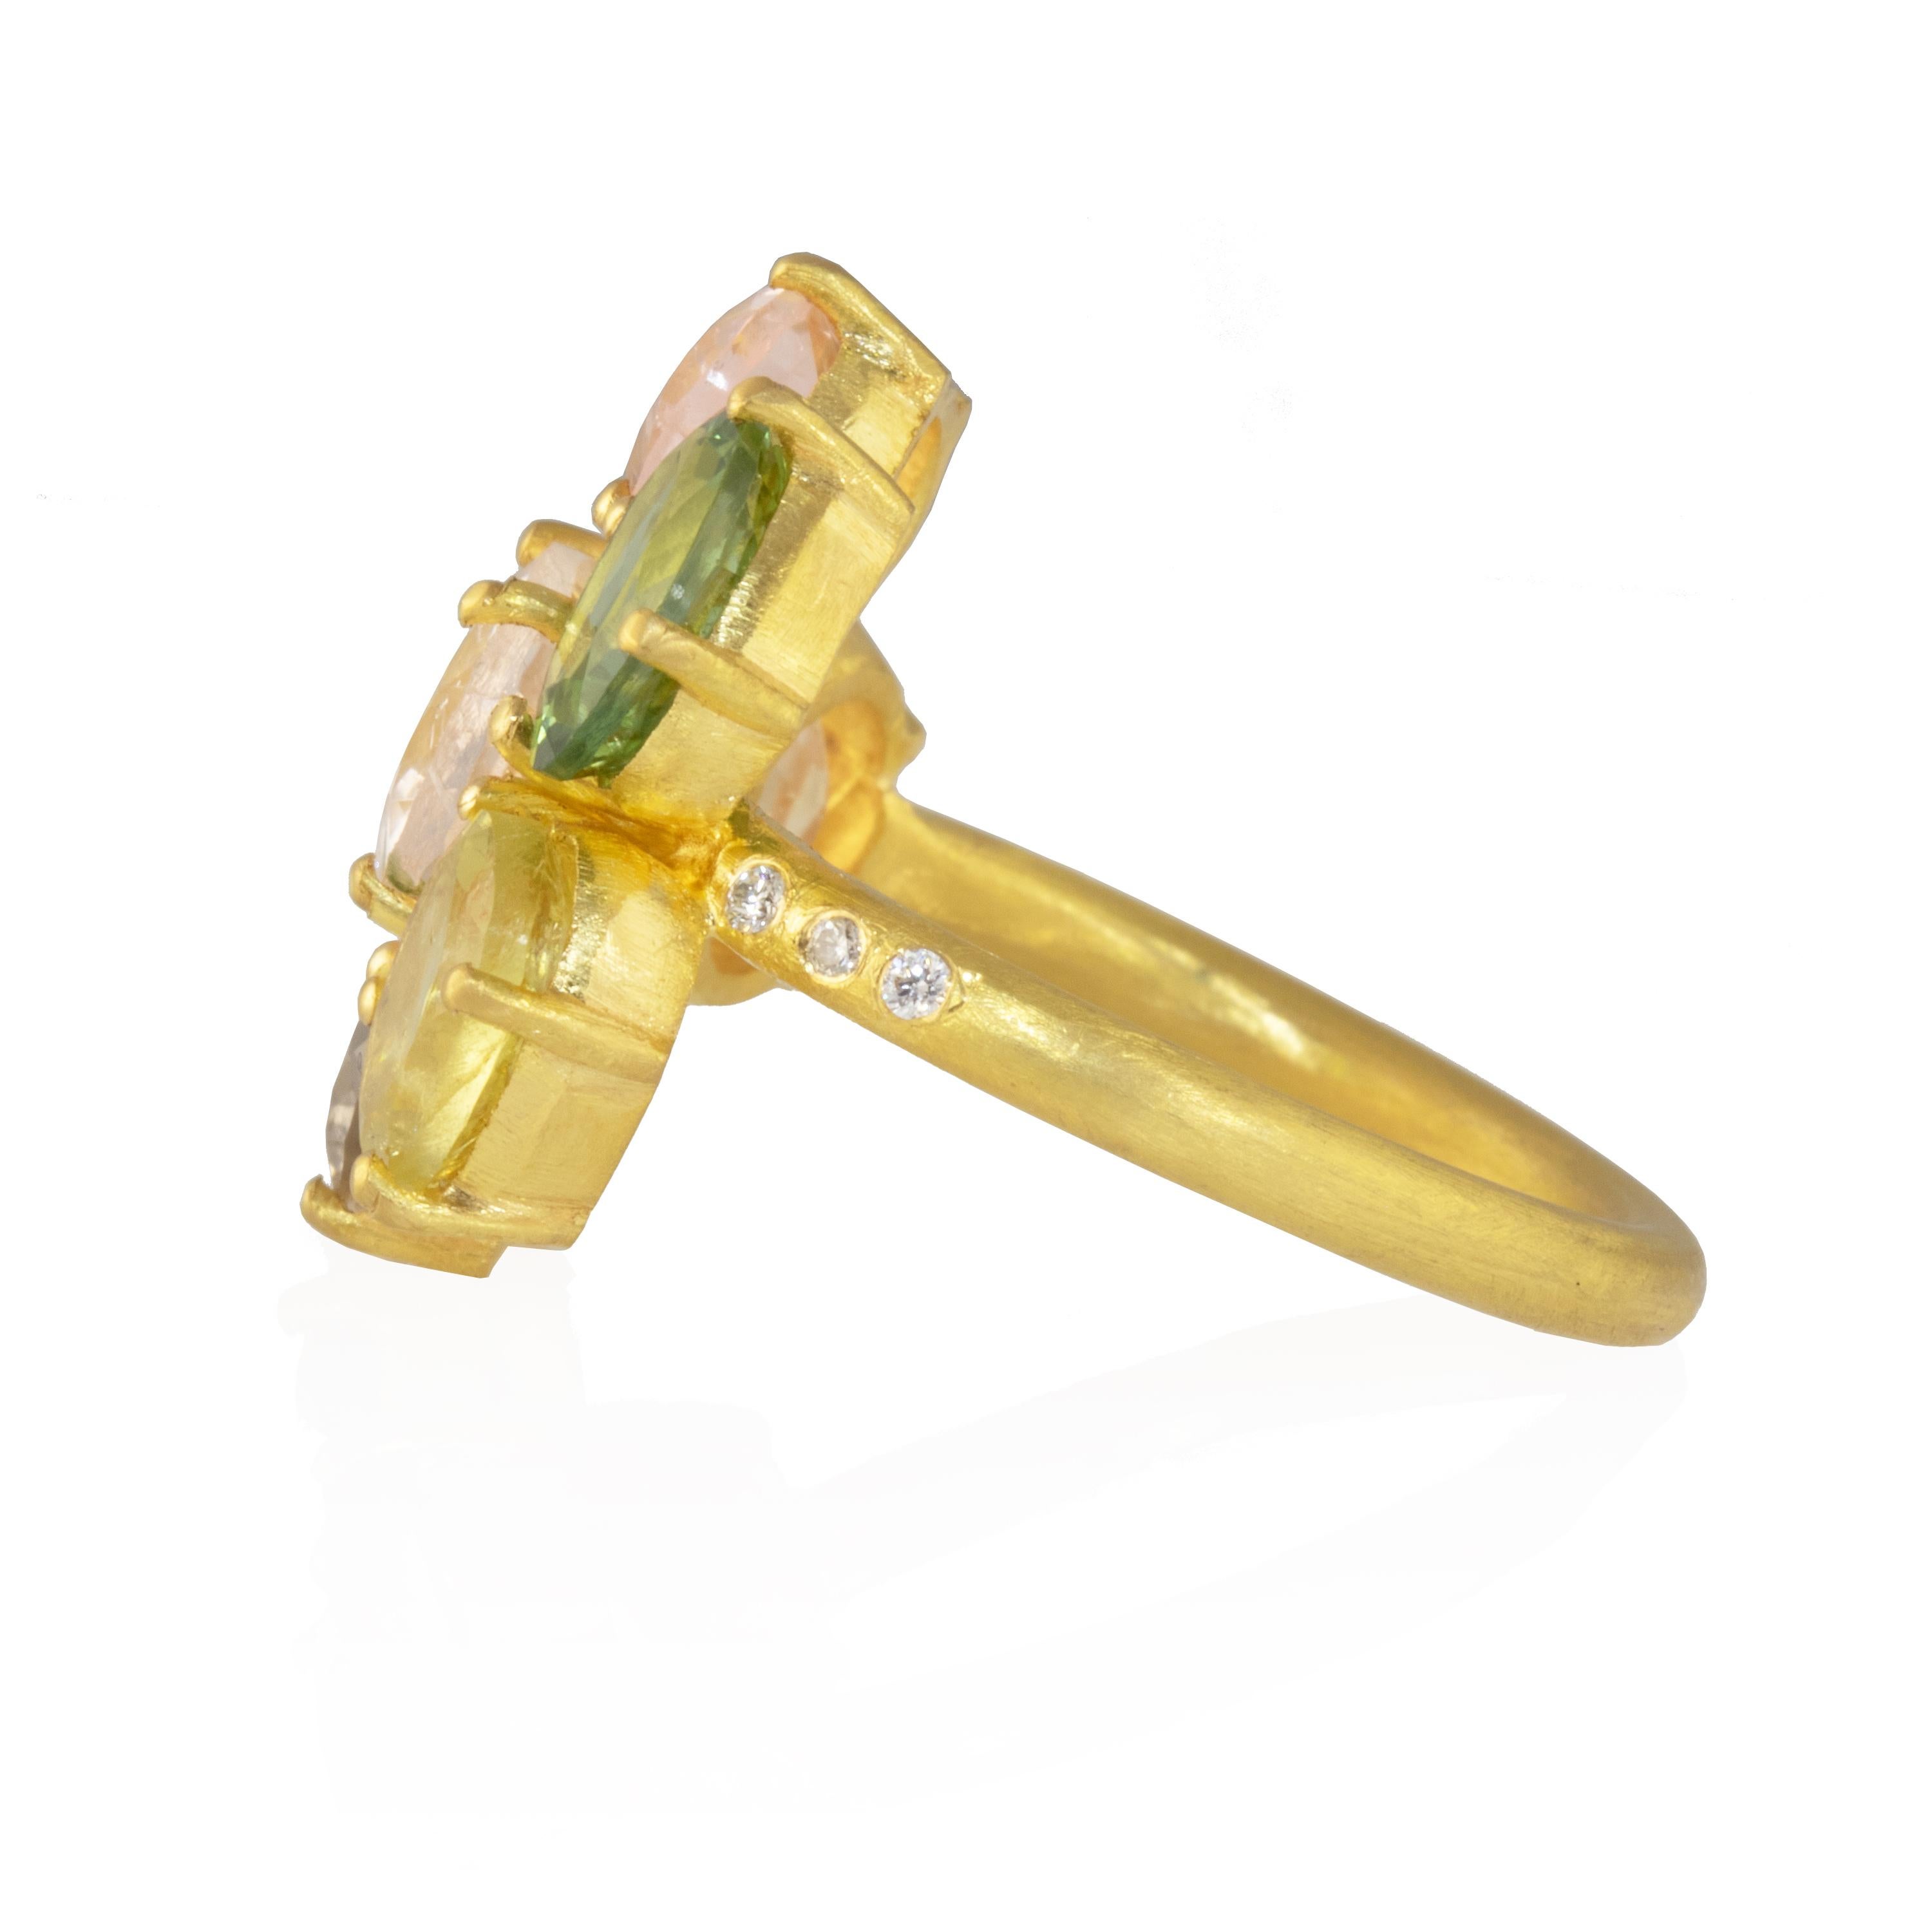 Brilliant Cut Ico & the Bird Fine Jewelry 7.60 carat Tourmaline Diamond Floral Gold Ring For Sale